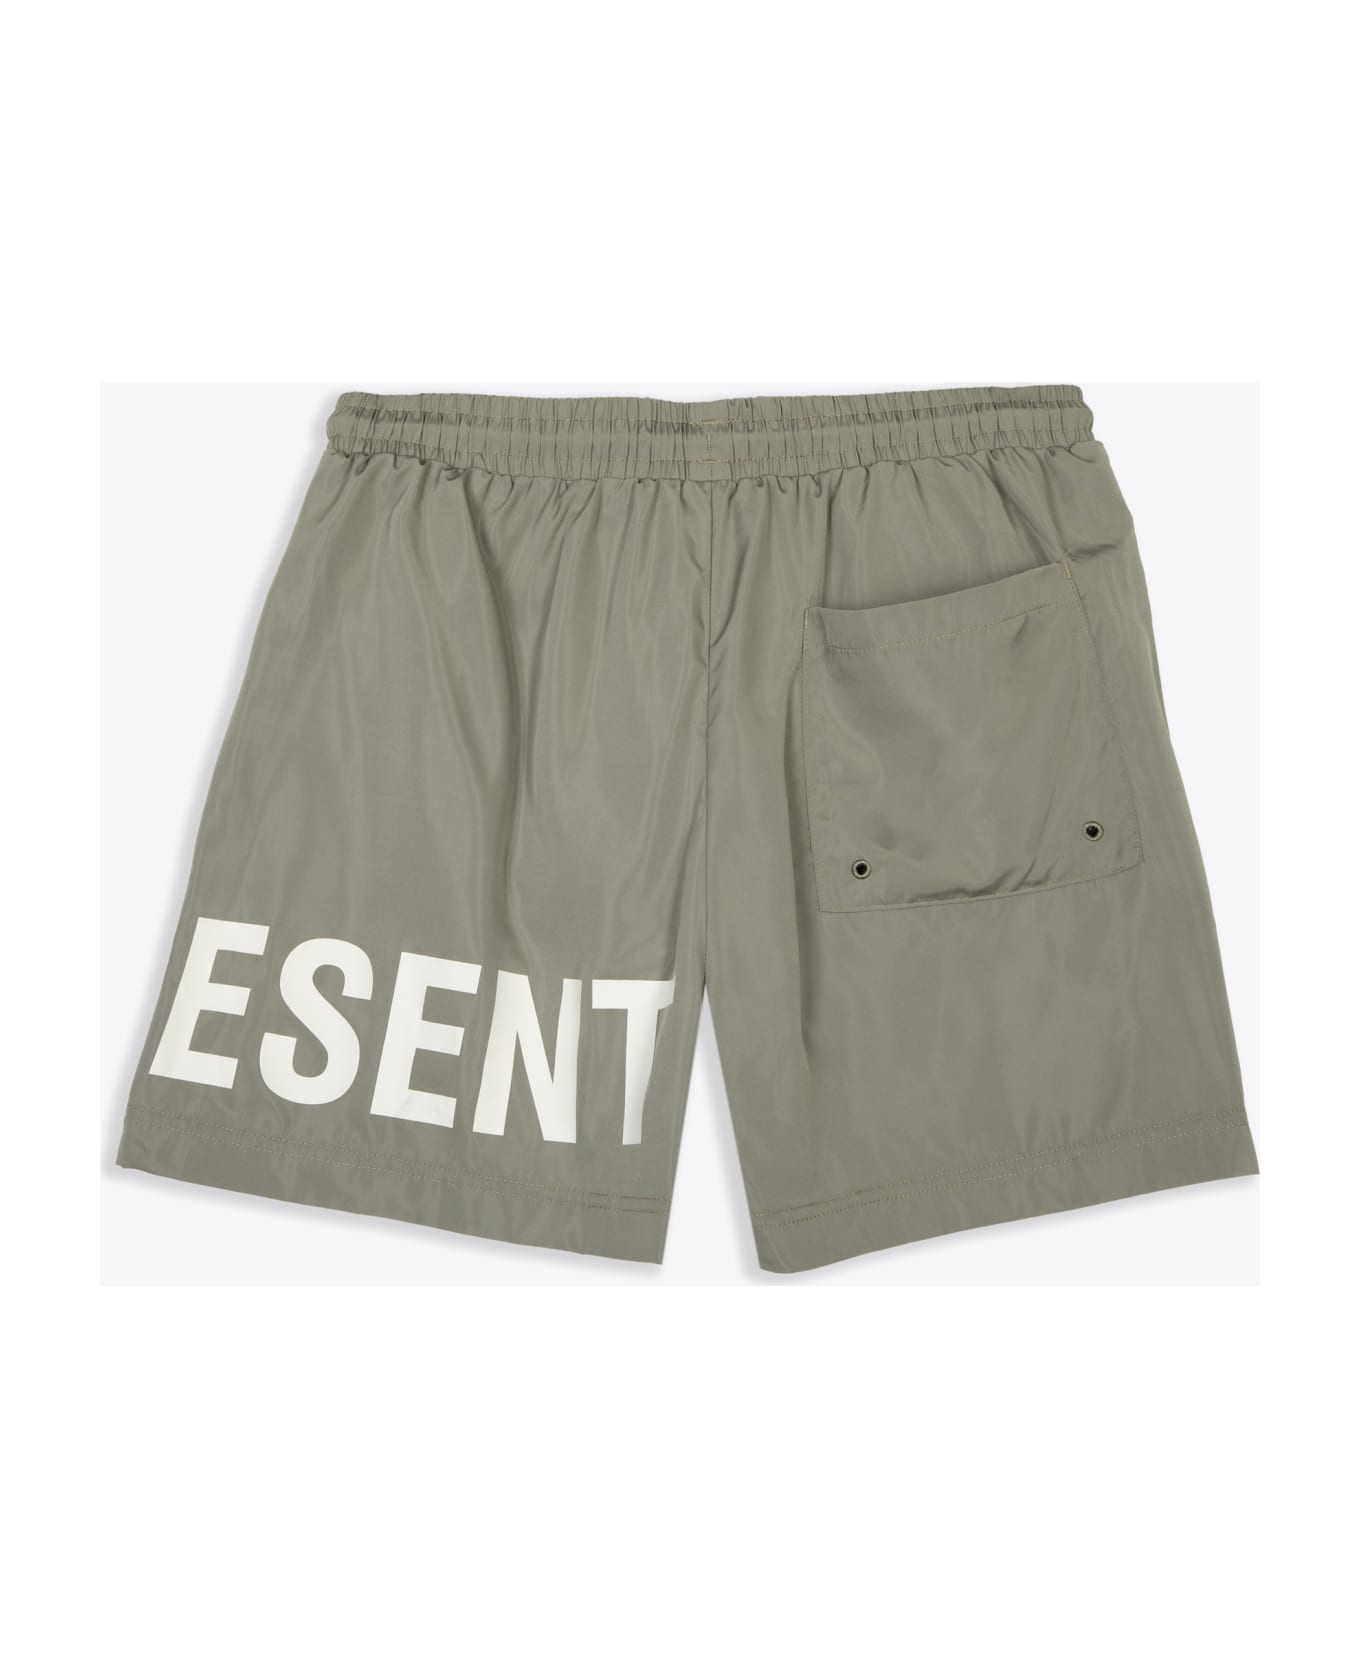 REPRESENT Swim Short Khaki green nylon swim shorts with logo - Swim Shorts - Cachi